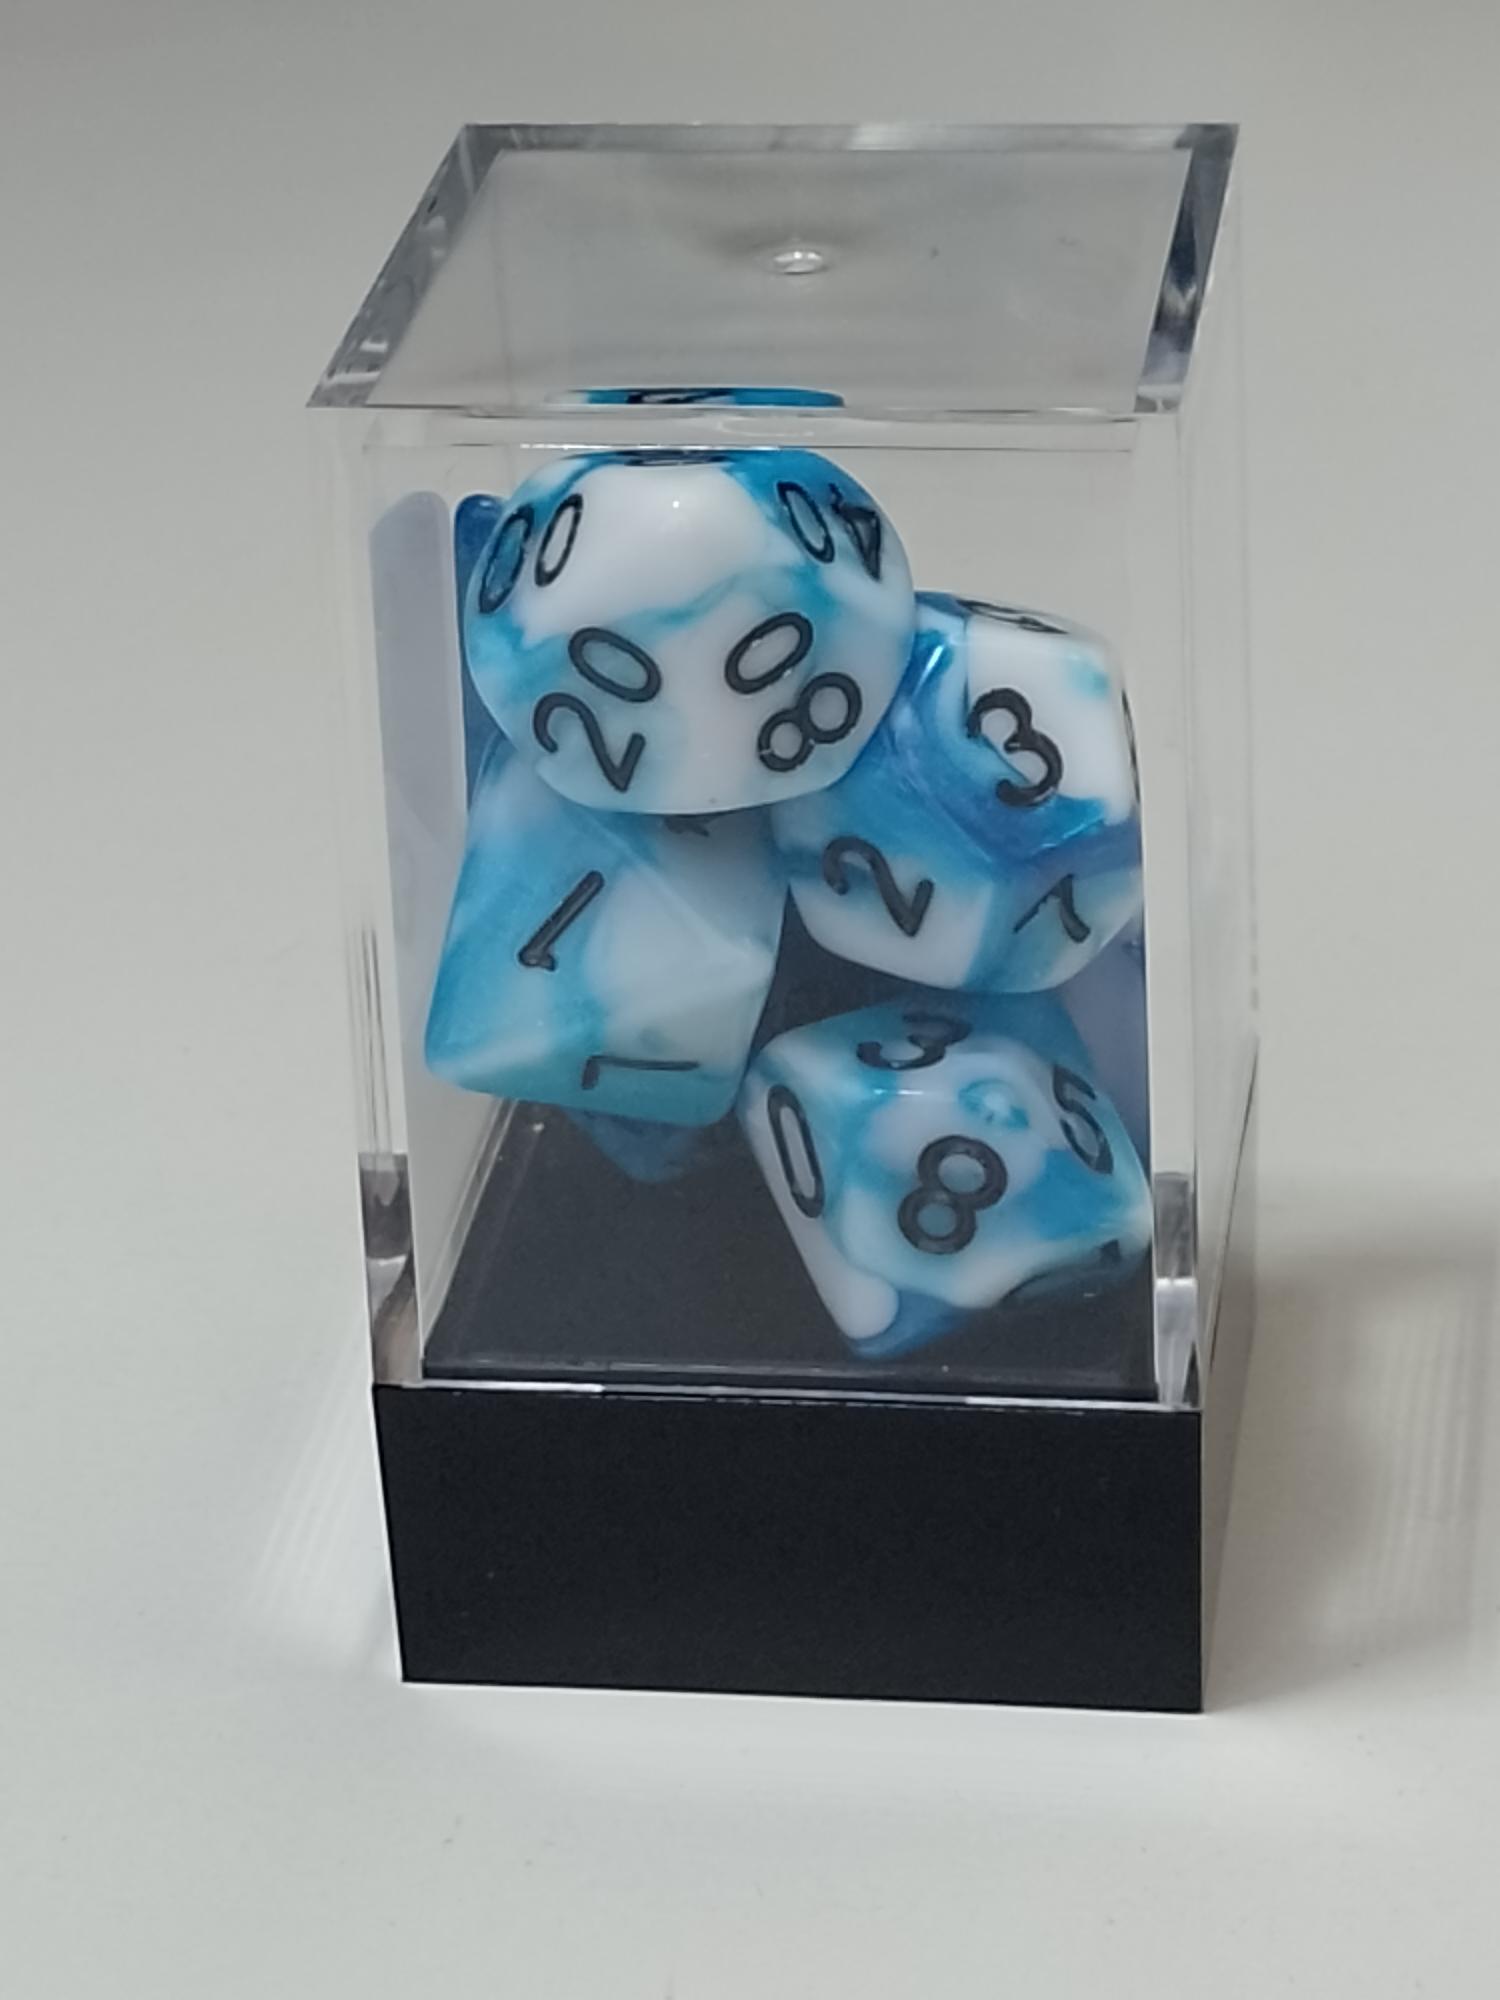 RPG Dice set (7) double color blauw wit